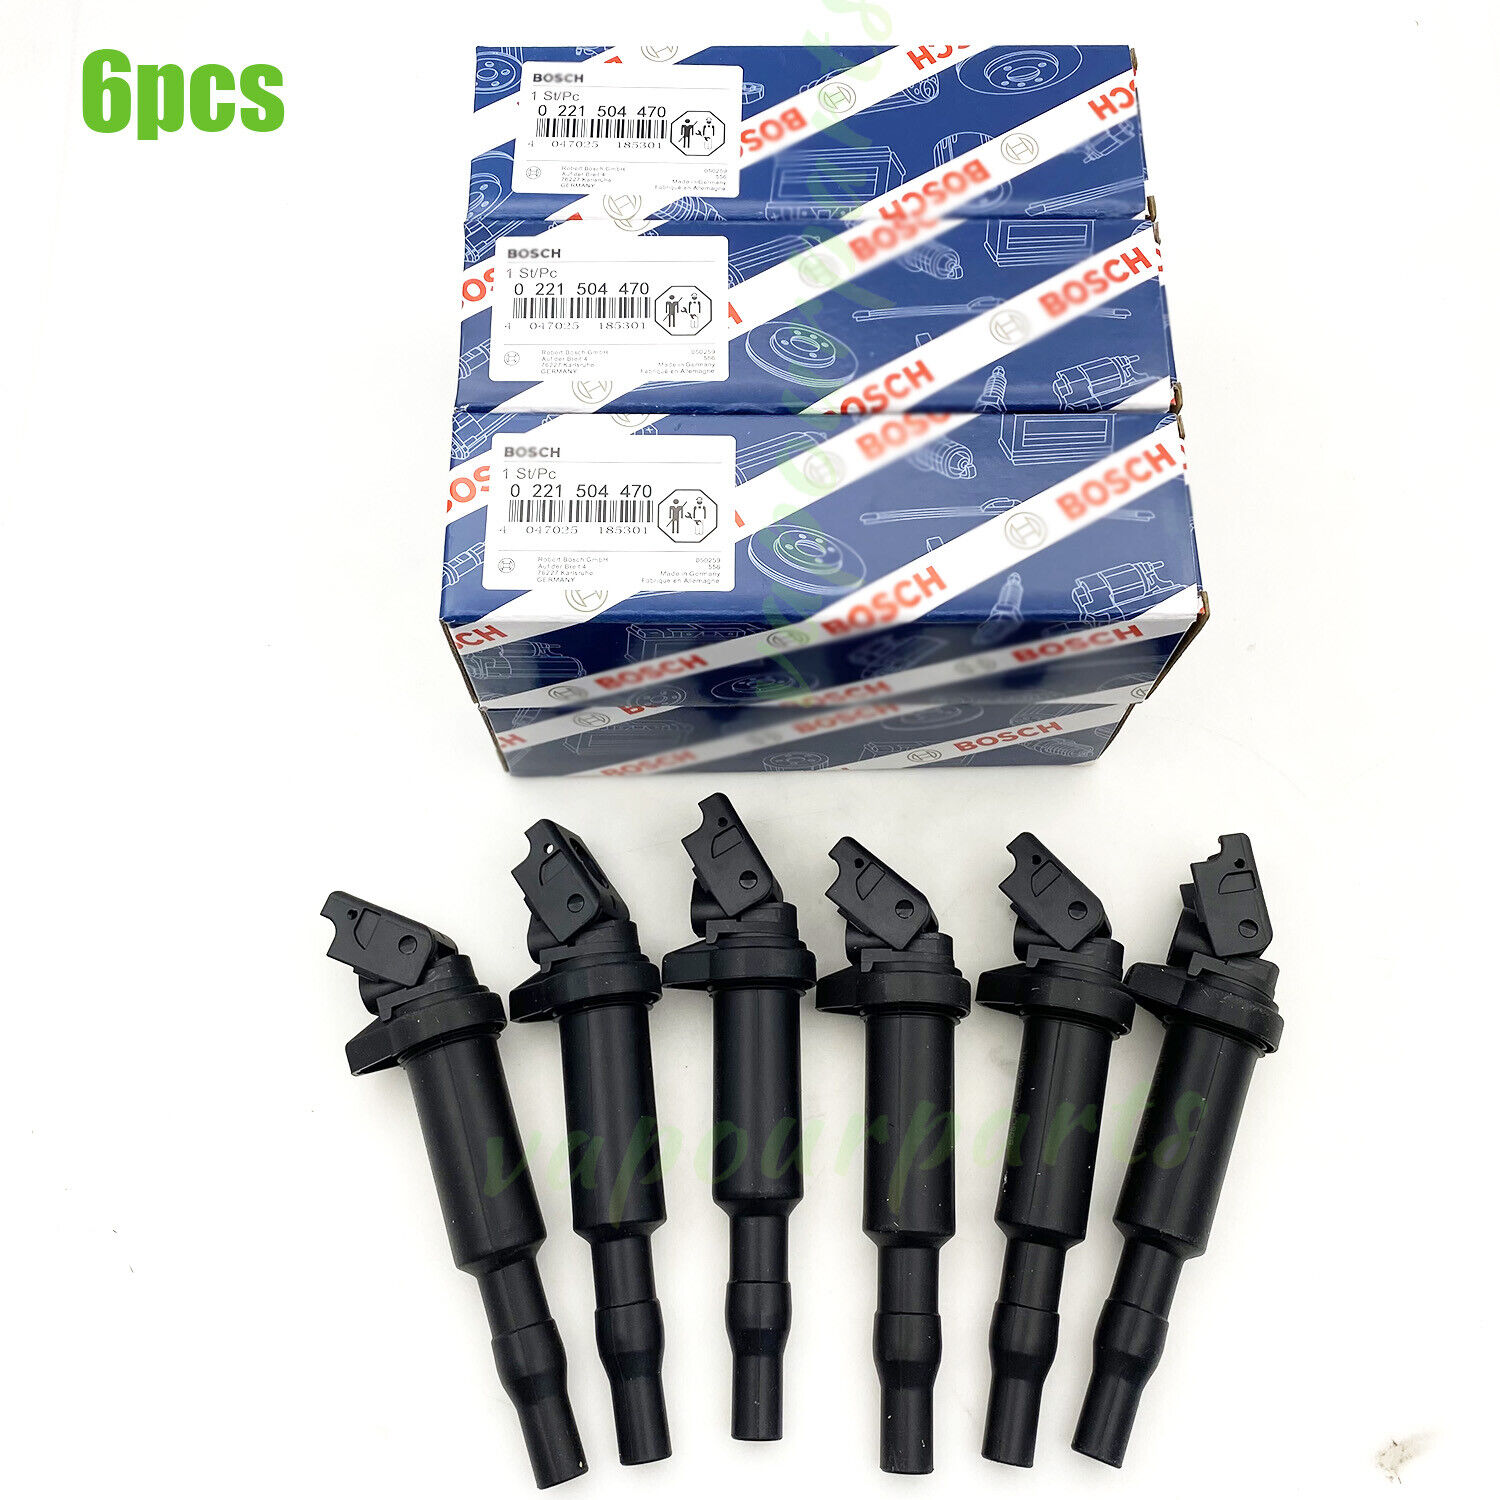 6PCS Ignition Coils Fits For BMW 325i 328i 335 525 528 530 535 0221504470 Bosch